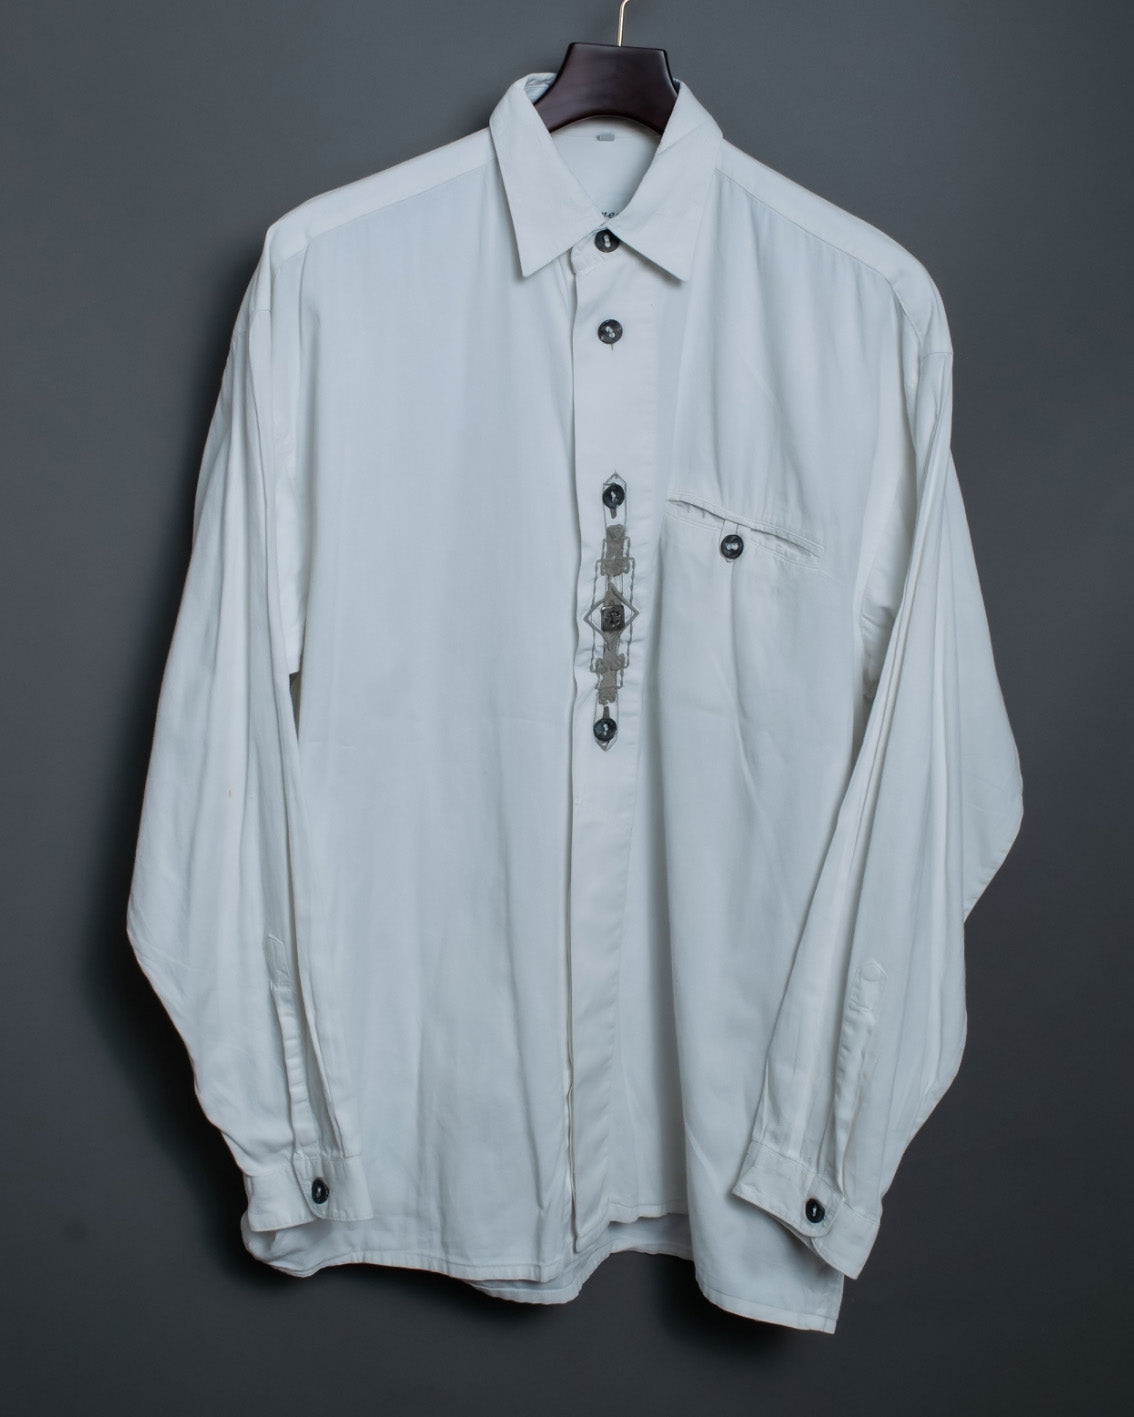 Vintage white tyrolean shirt